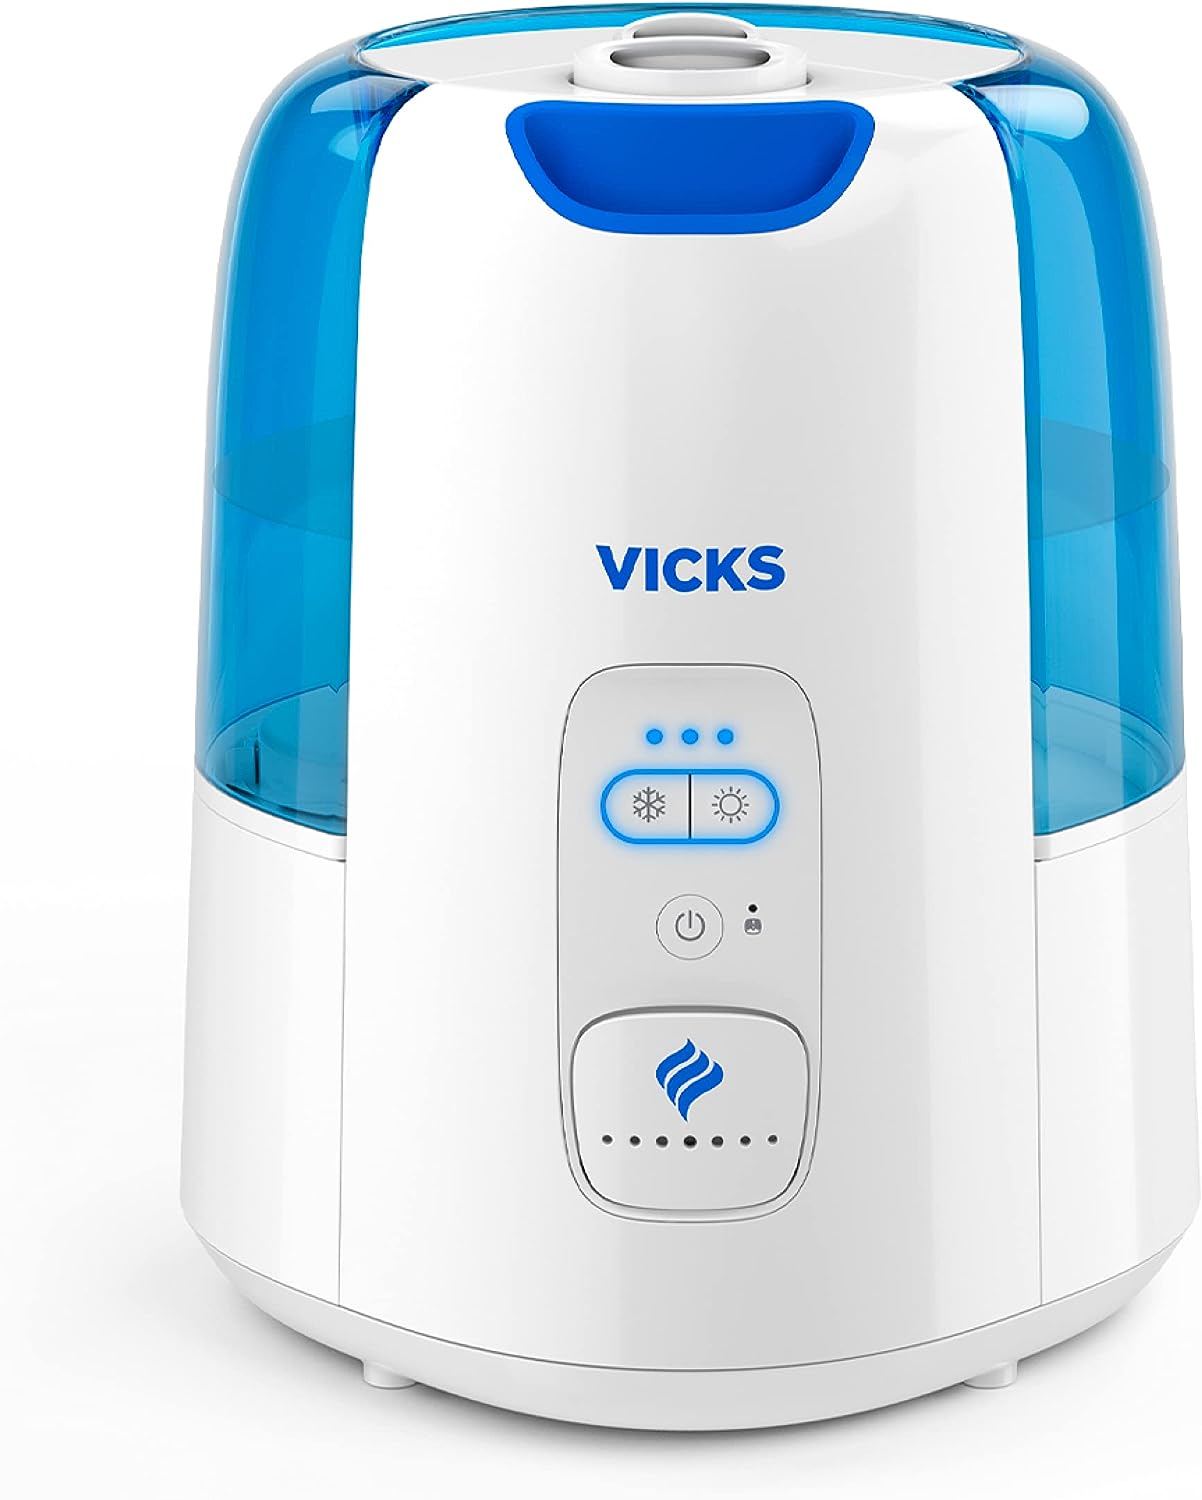 best vicks humidifier: Vicks Dual Comfort Mist Humidifier Review